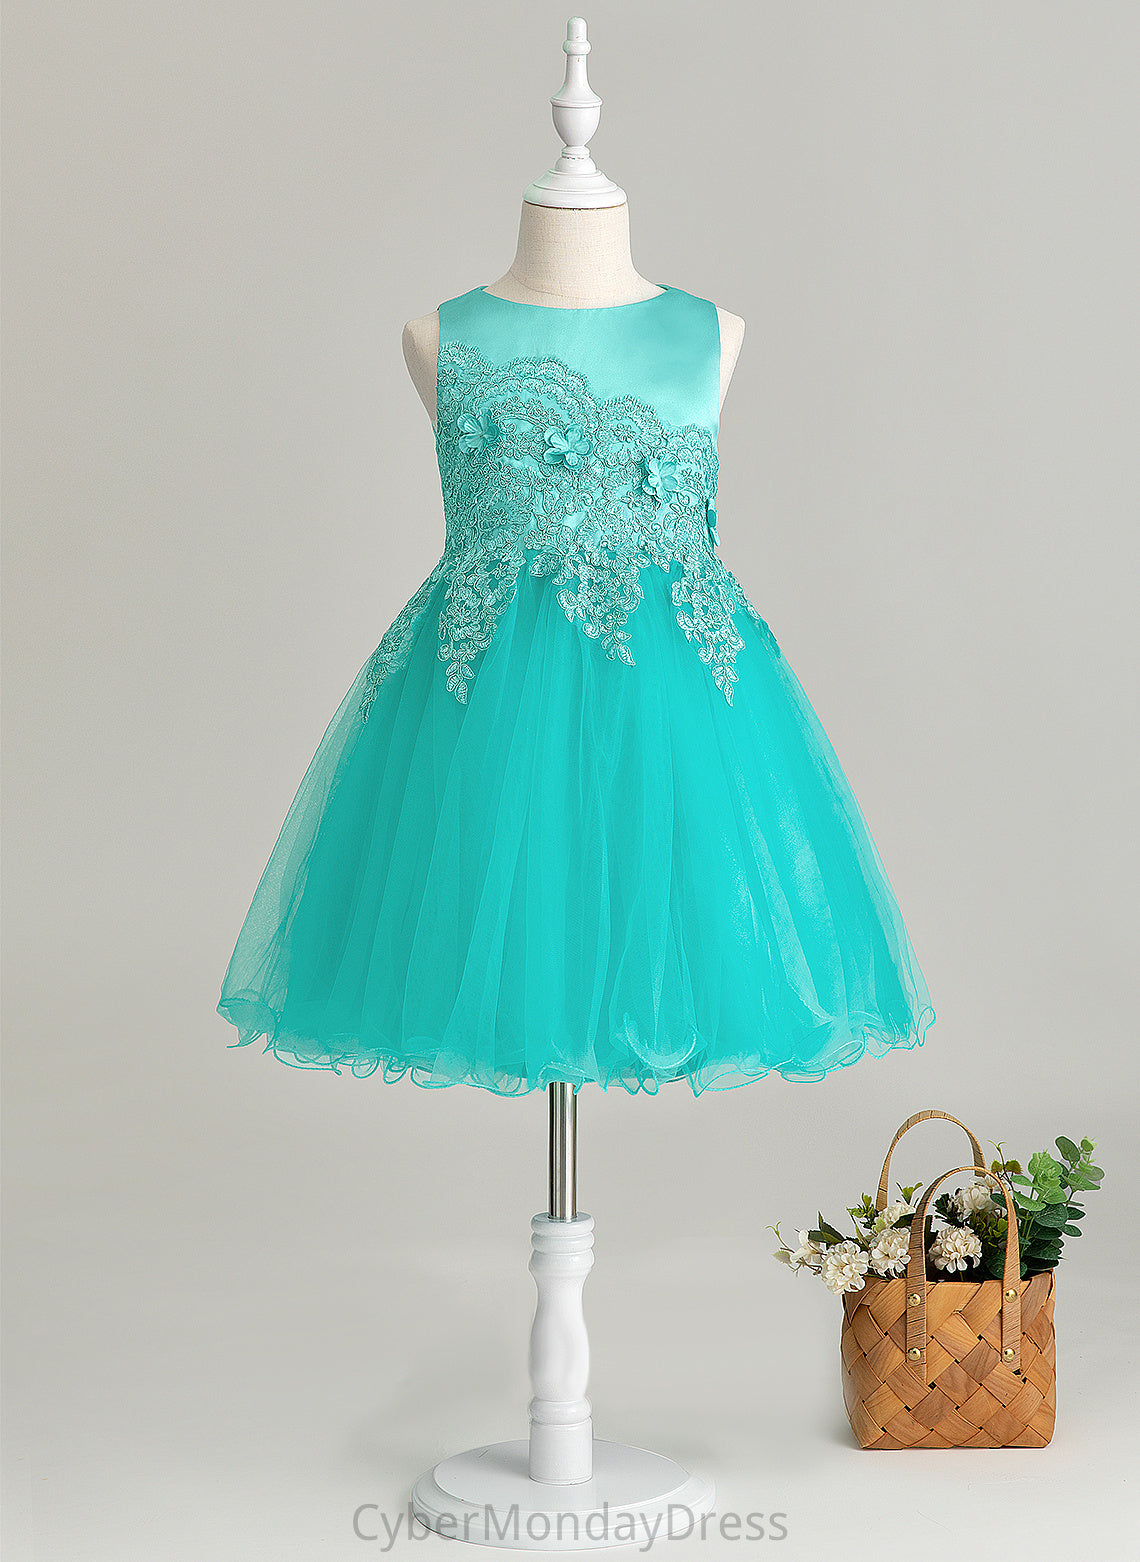 With Scoop - Flower Satin/Tulle/Lace Girl Flower Girl Dresses Flower(s) Sleeveless Neck Knee-length Shayla Dress A-Line